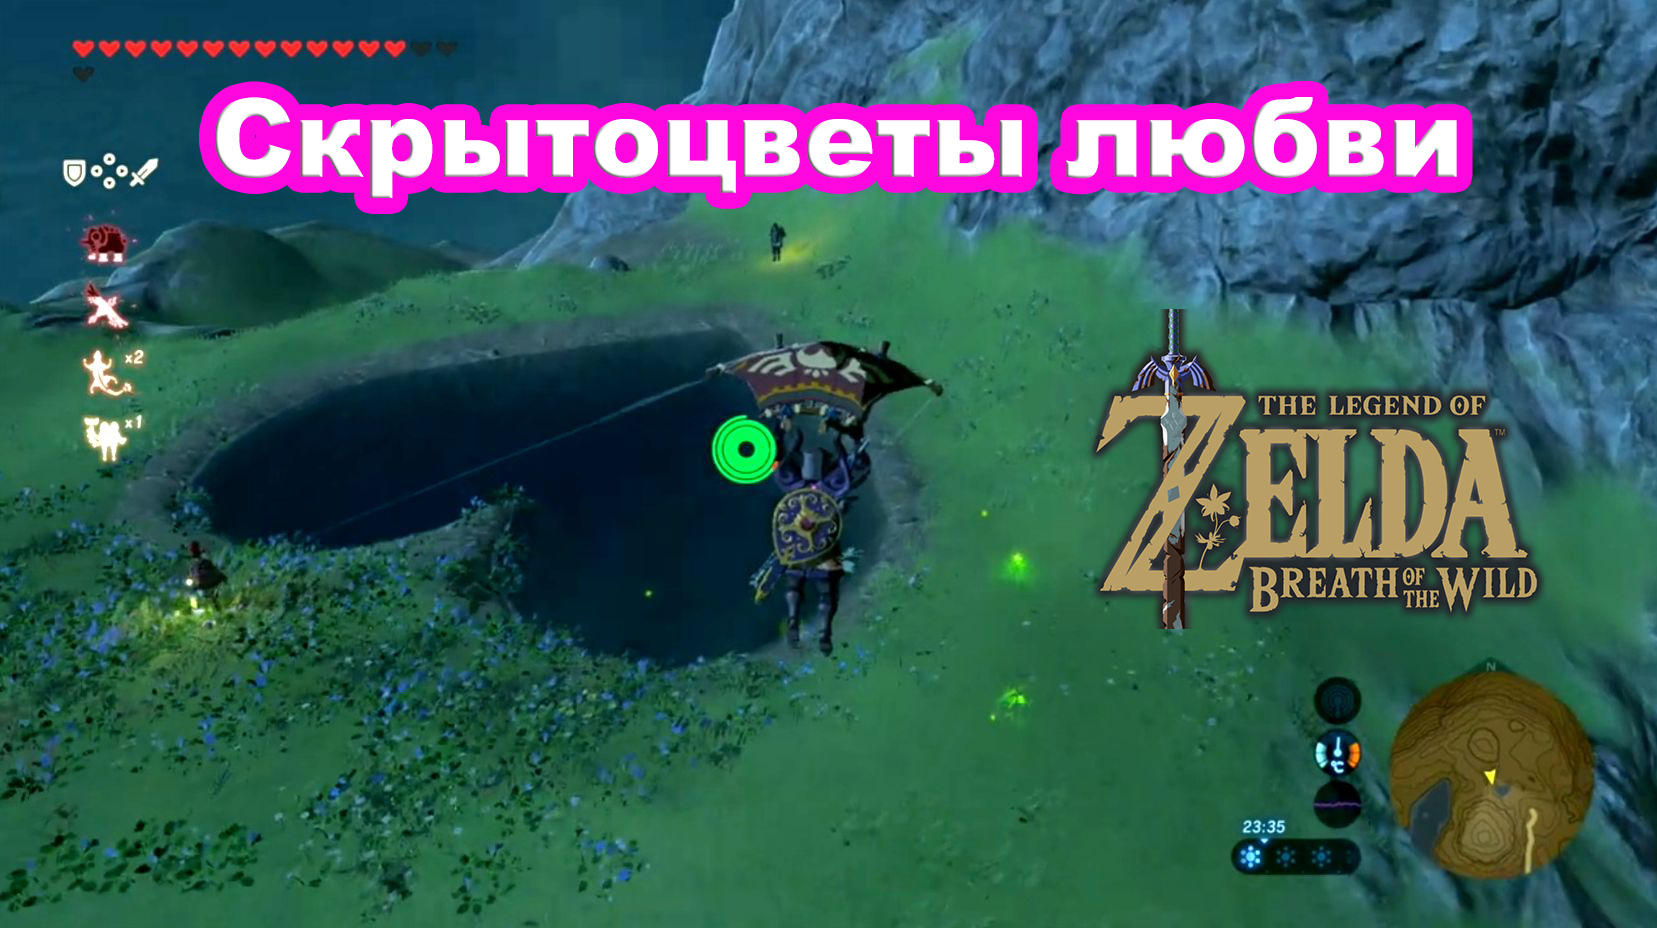 Скрытоцветы любви. The Legend of Zelda Breath of the Wild. Nintendo Switch